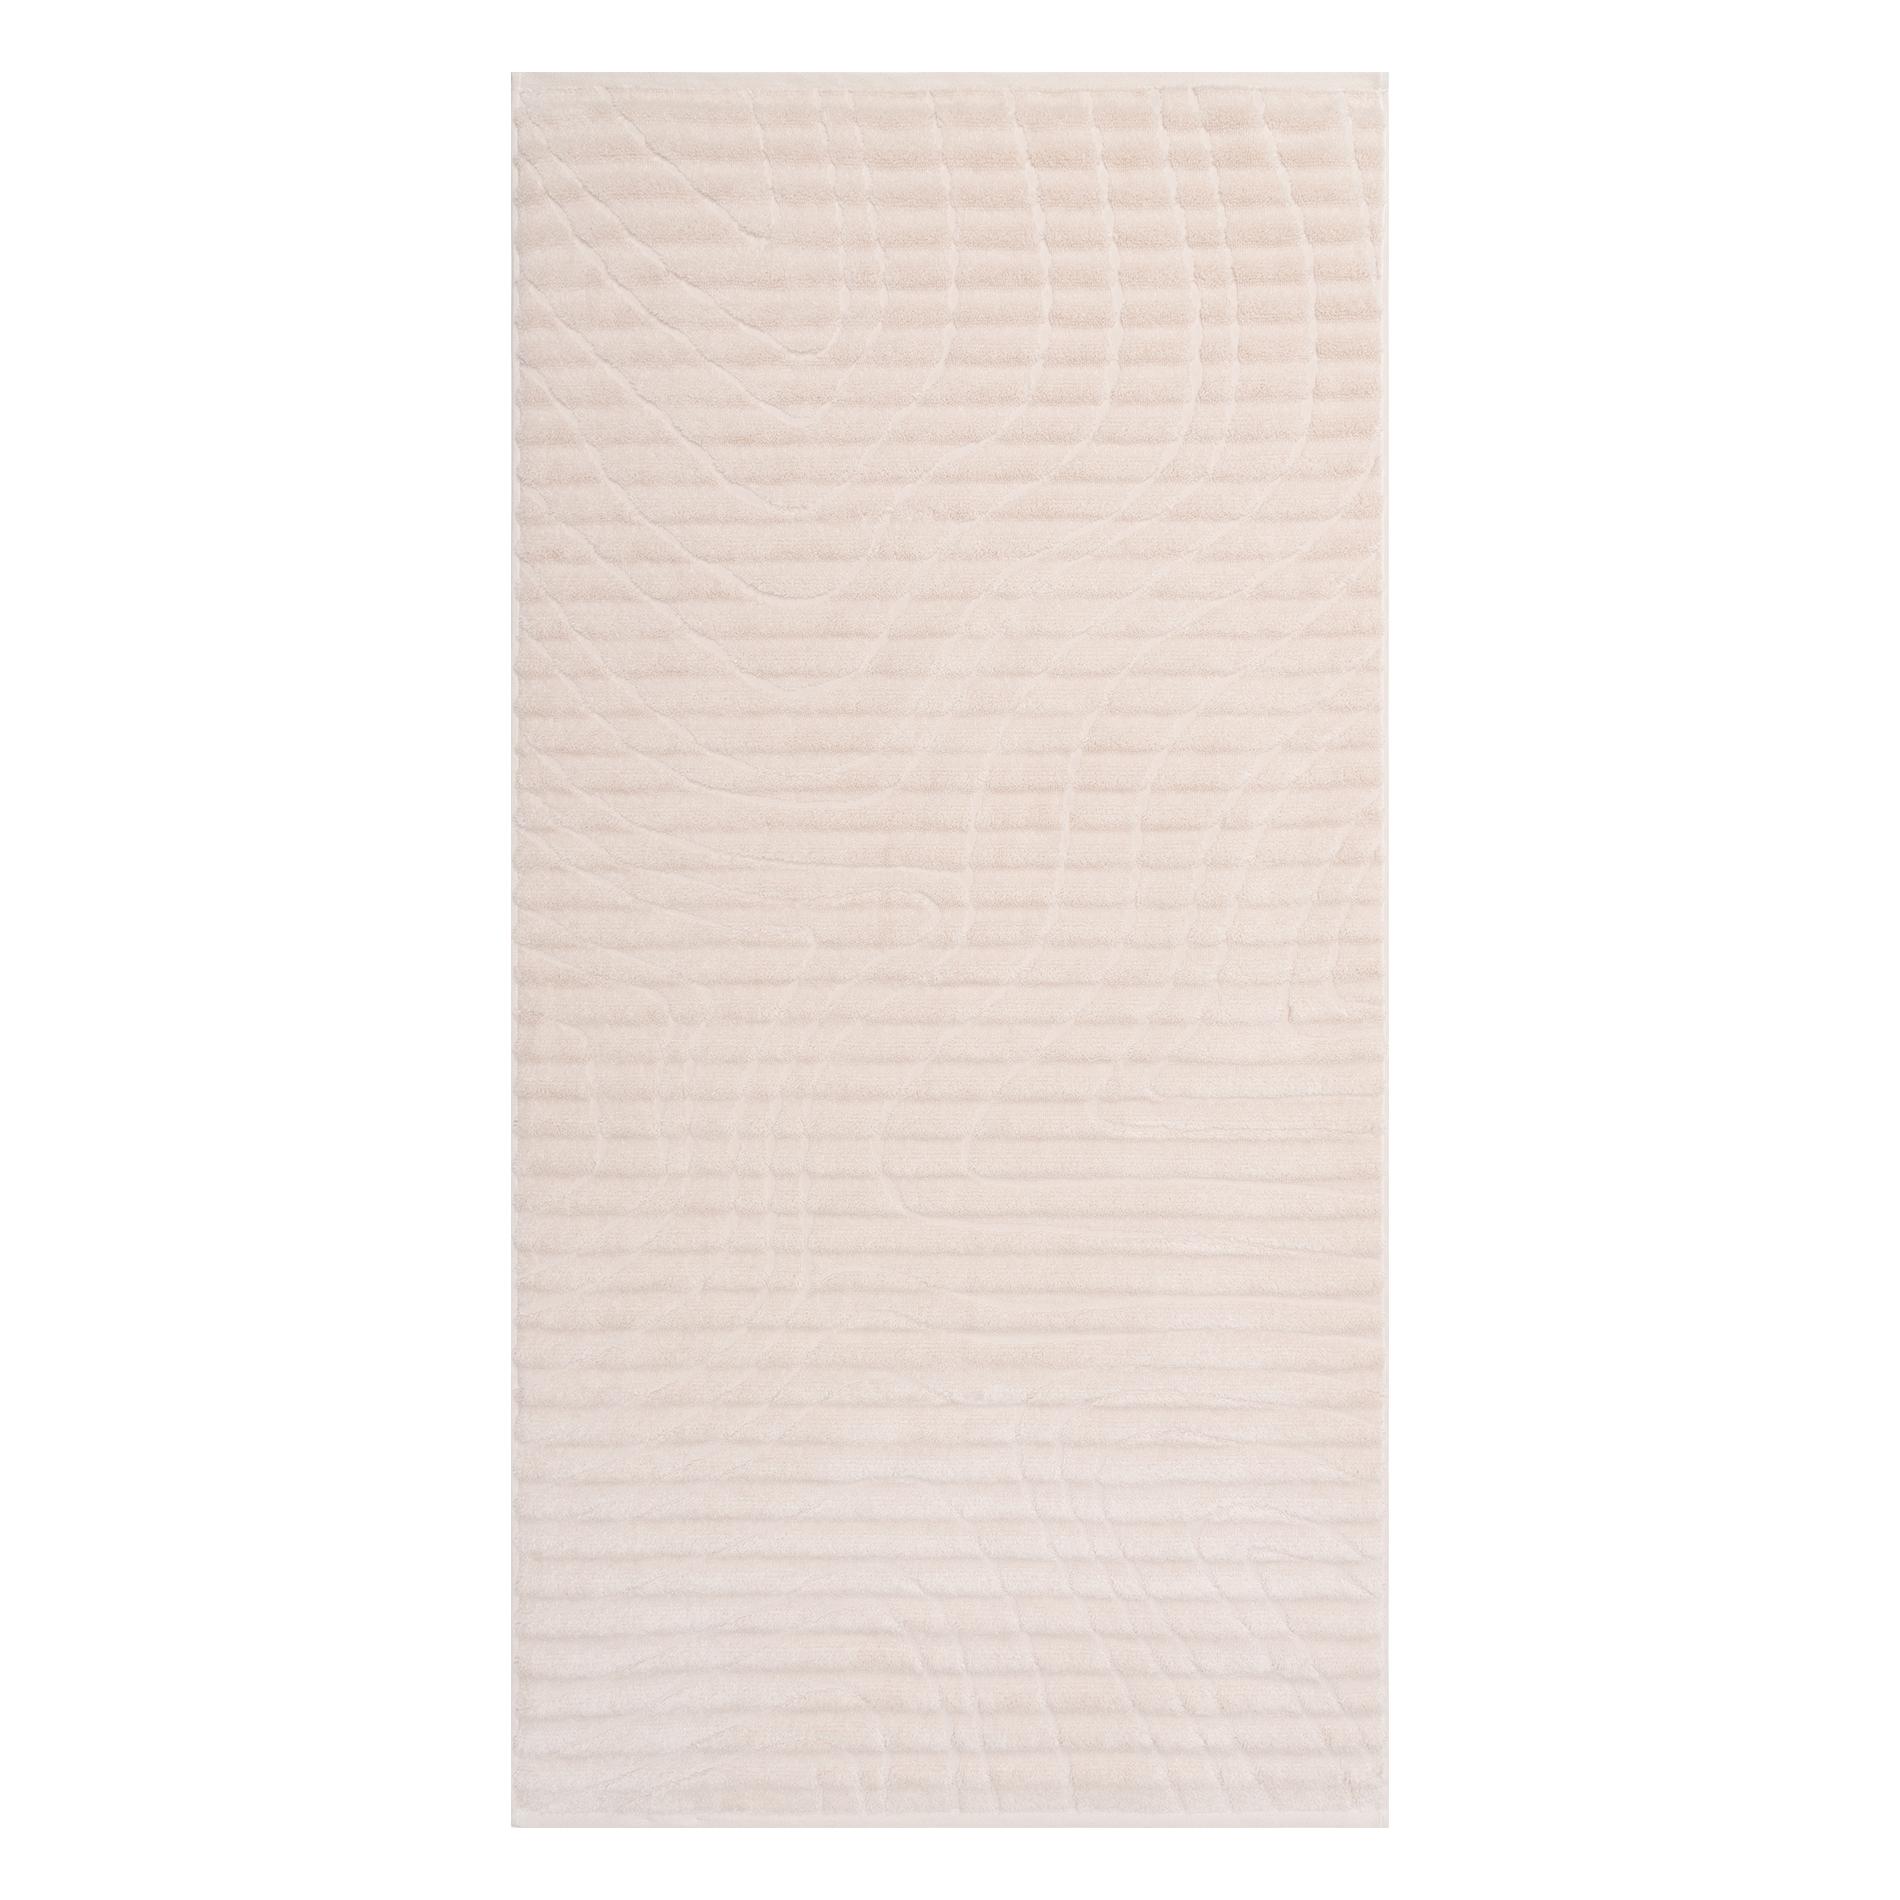 Махровое полотенце Cleanelly Albero bianco молочное 70х140 см махровое полотенце cleanelly albero bianco молочное 50х100 см